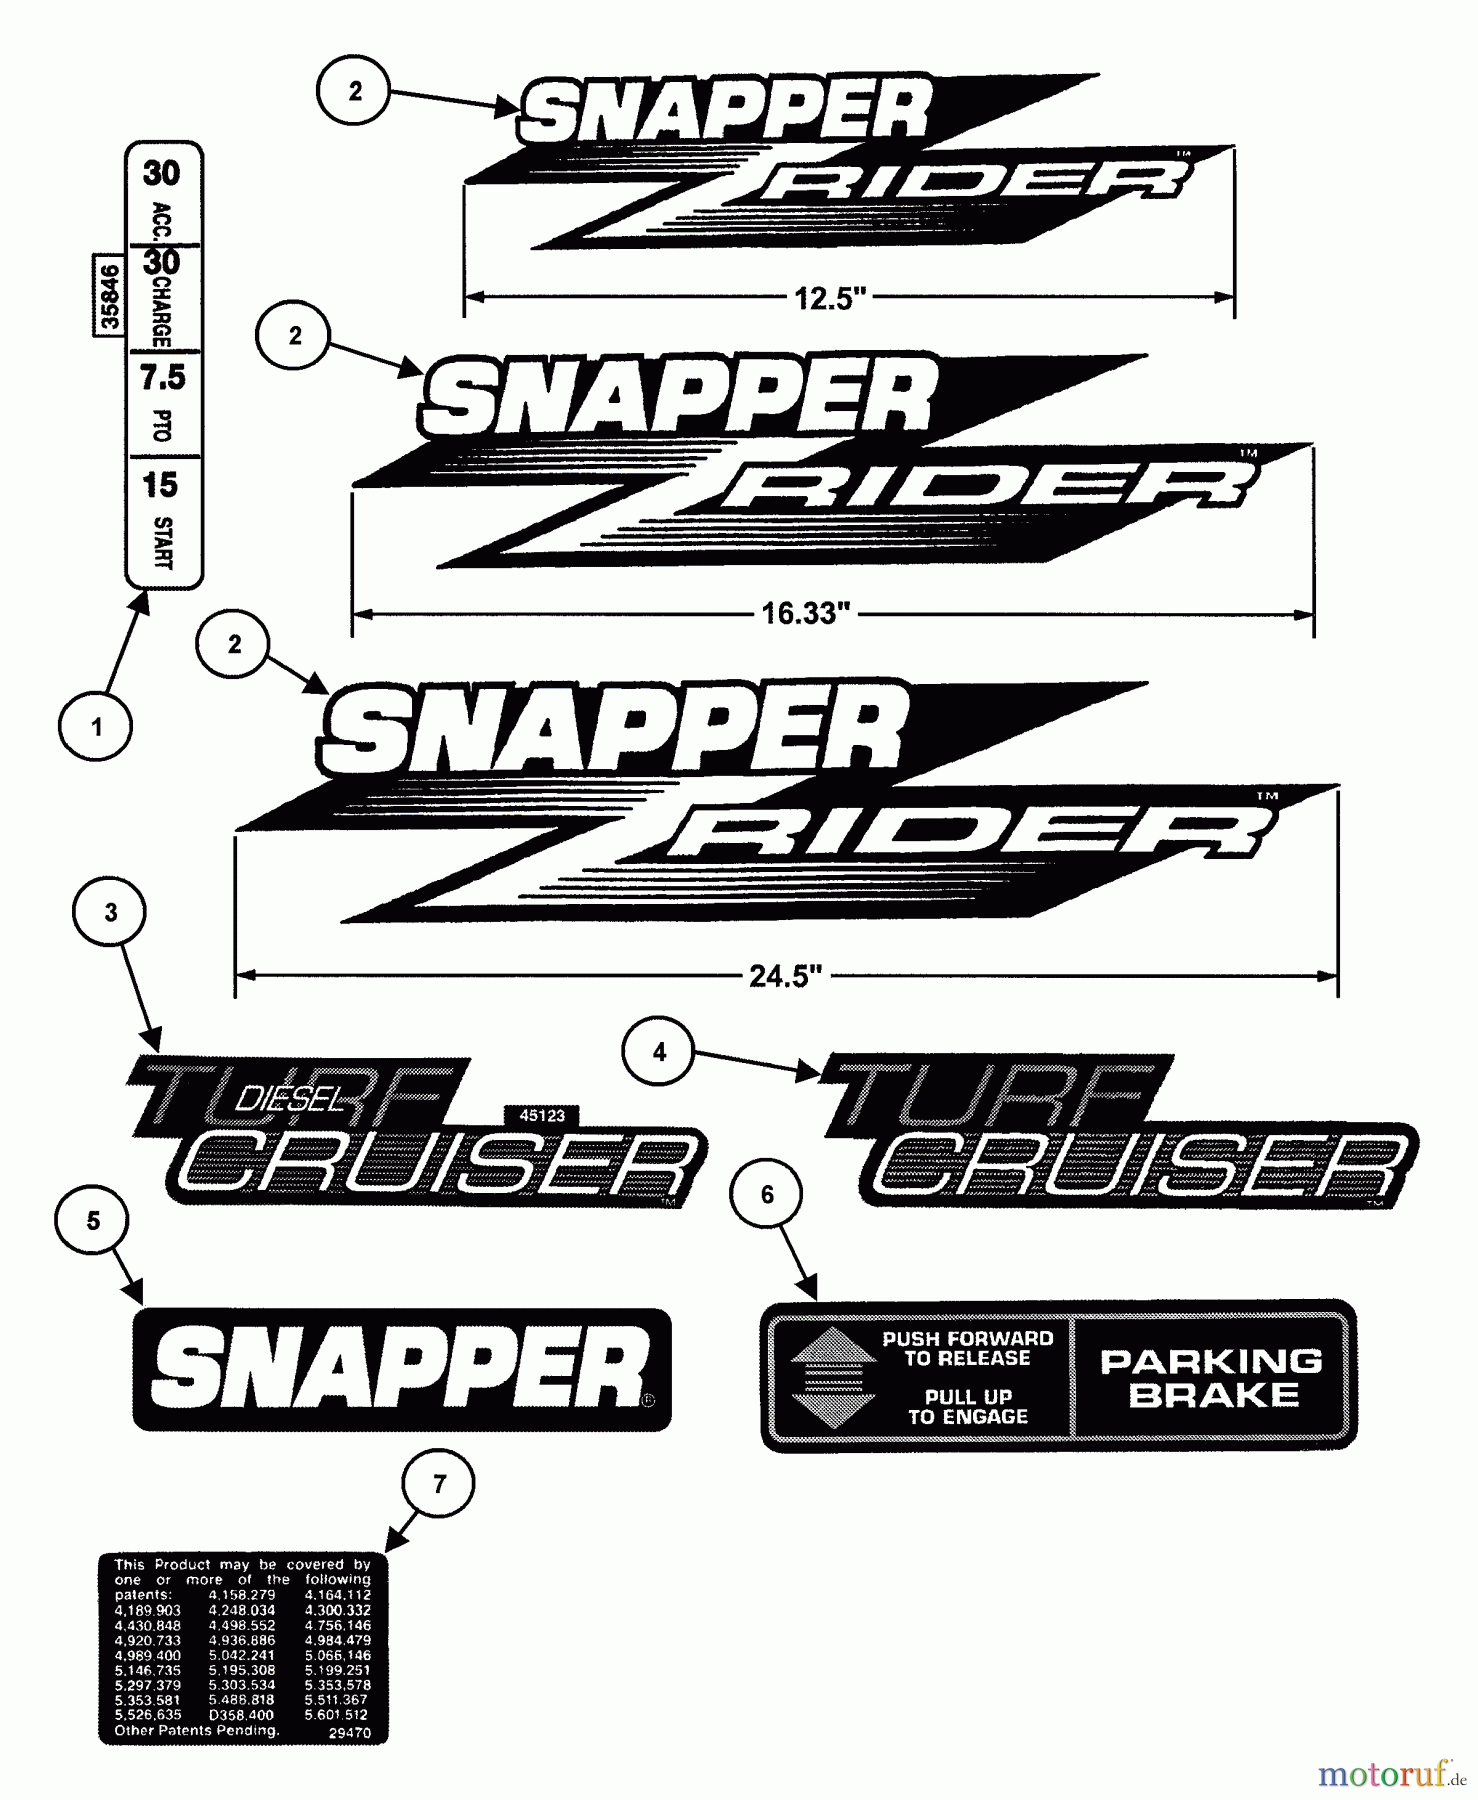  Snapper Mähdecks ZF5200M - Snapper 52